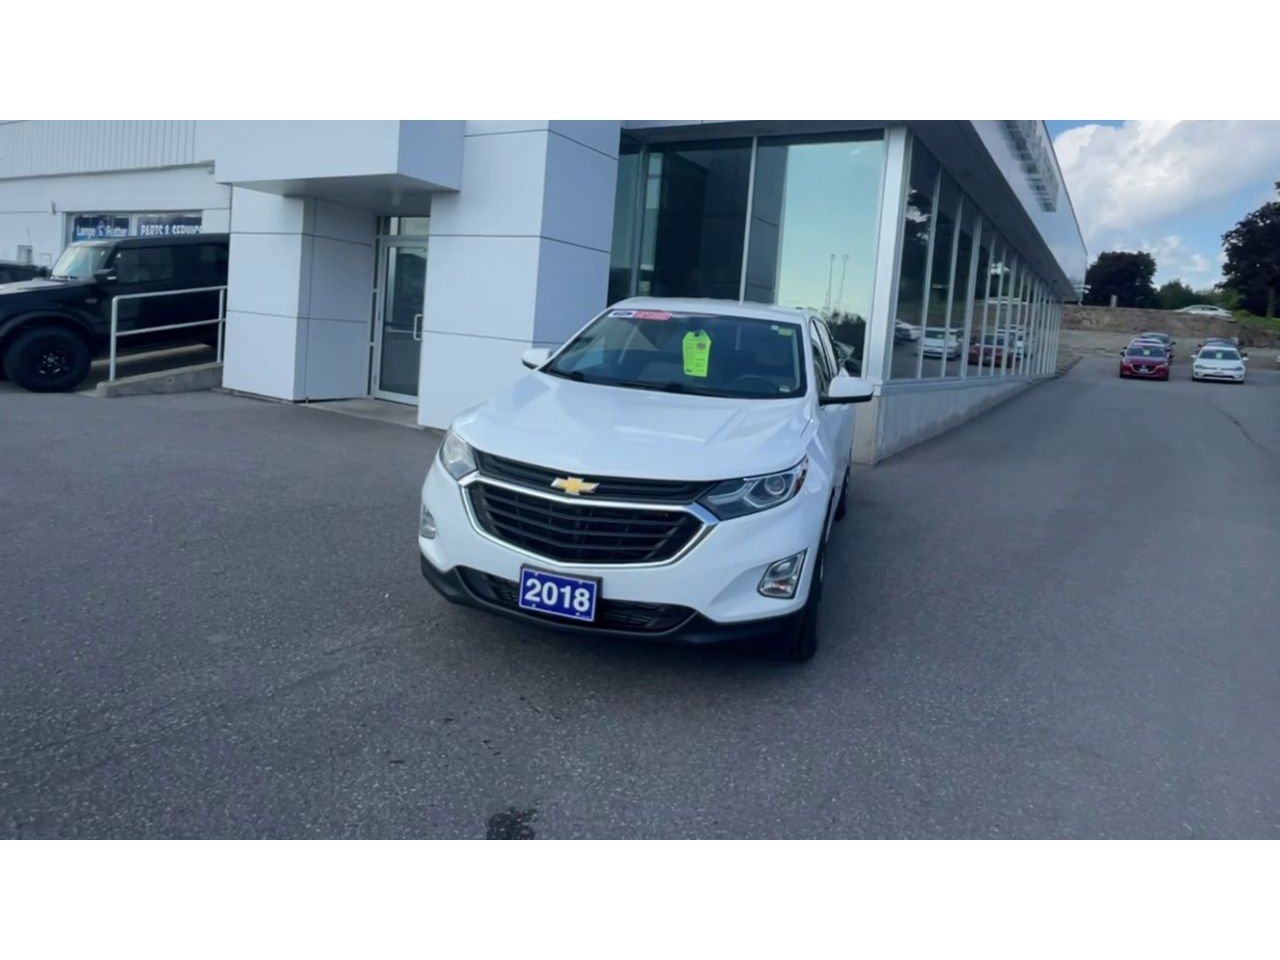 2018 Chevrolet Equinox - P21028 Full Image 4